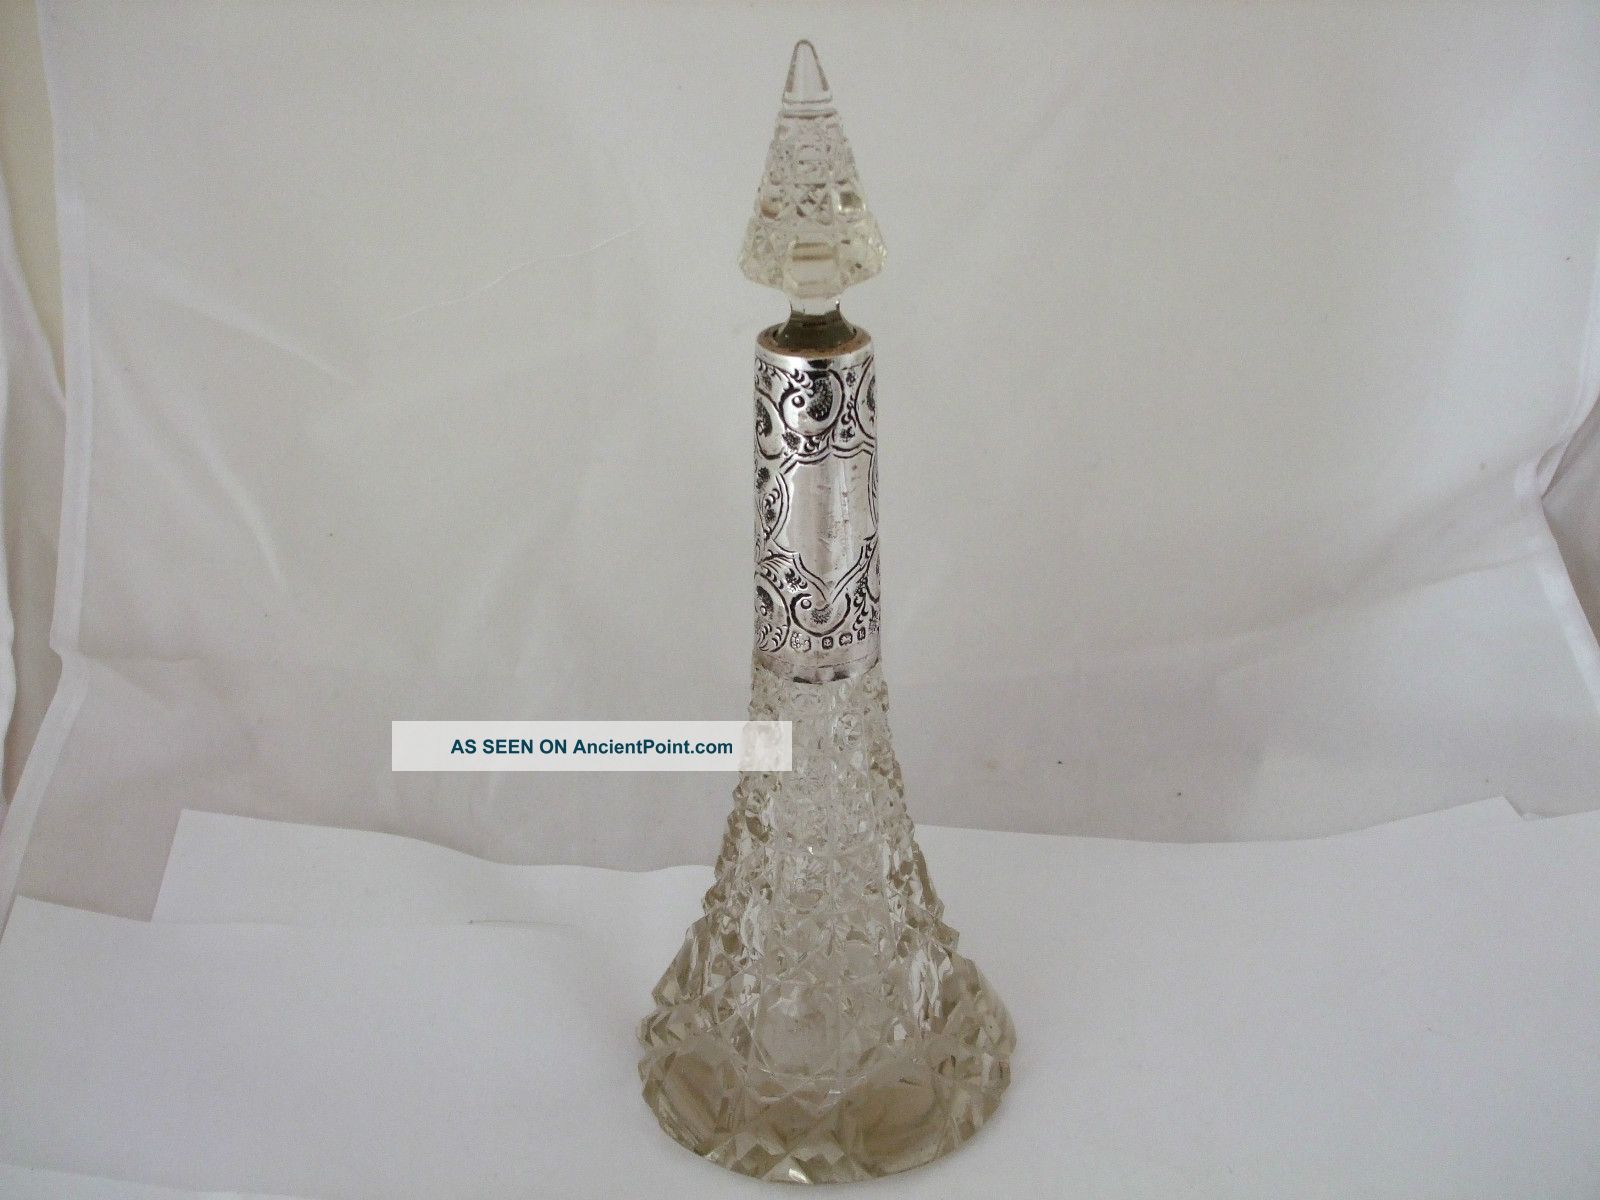 Antique Silver Collar Steeple Perfume Scent Bottle Hm 1909 Fine Cut Glass Base Bottles photo